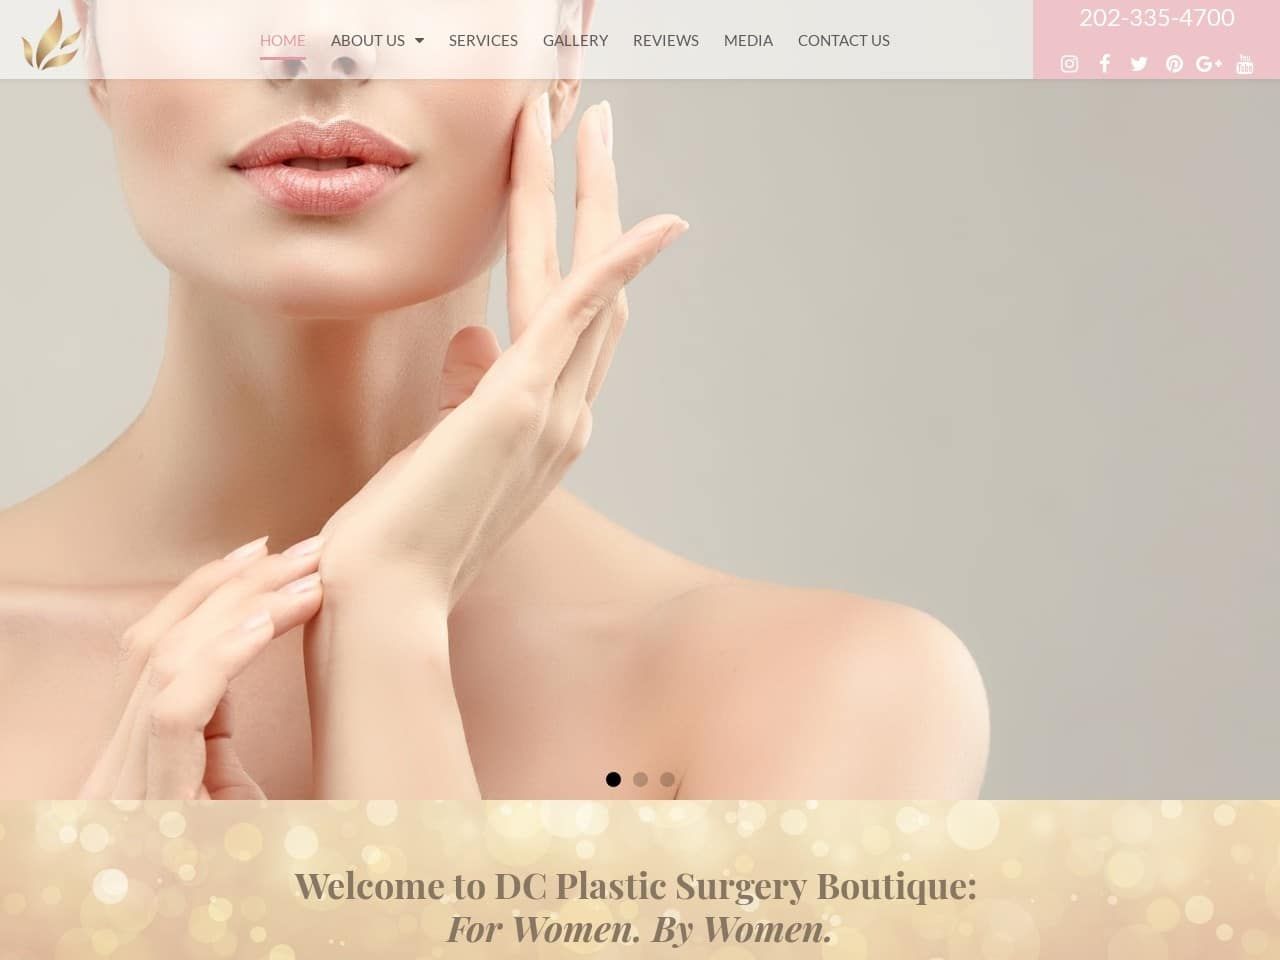 Dc Plastic Surgery Boutique Website Screenshot From Url Dcplasticsurgeryboutique.com